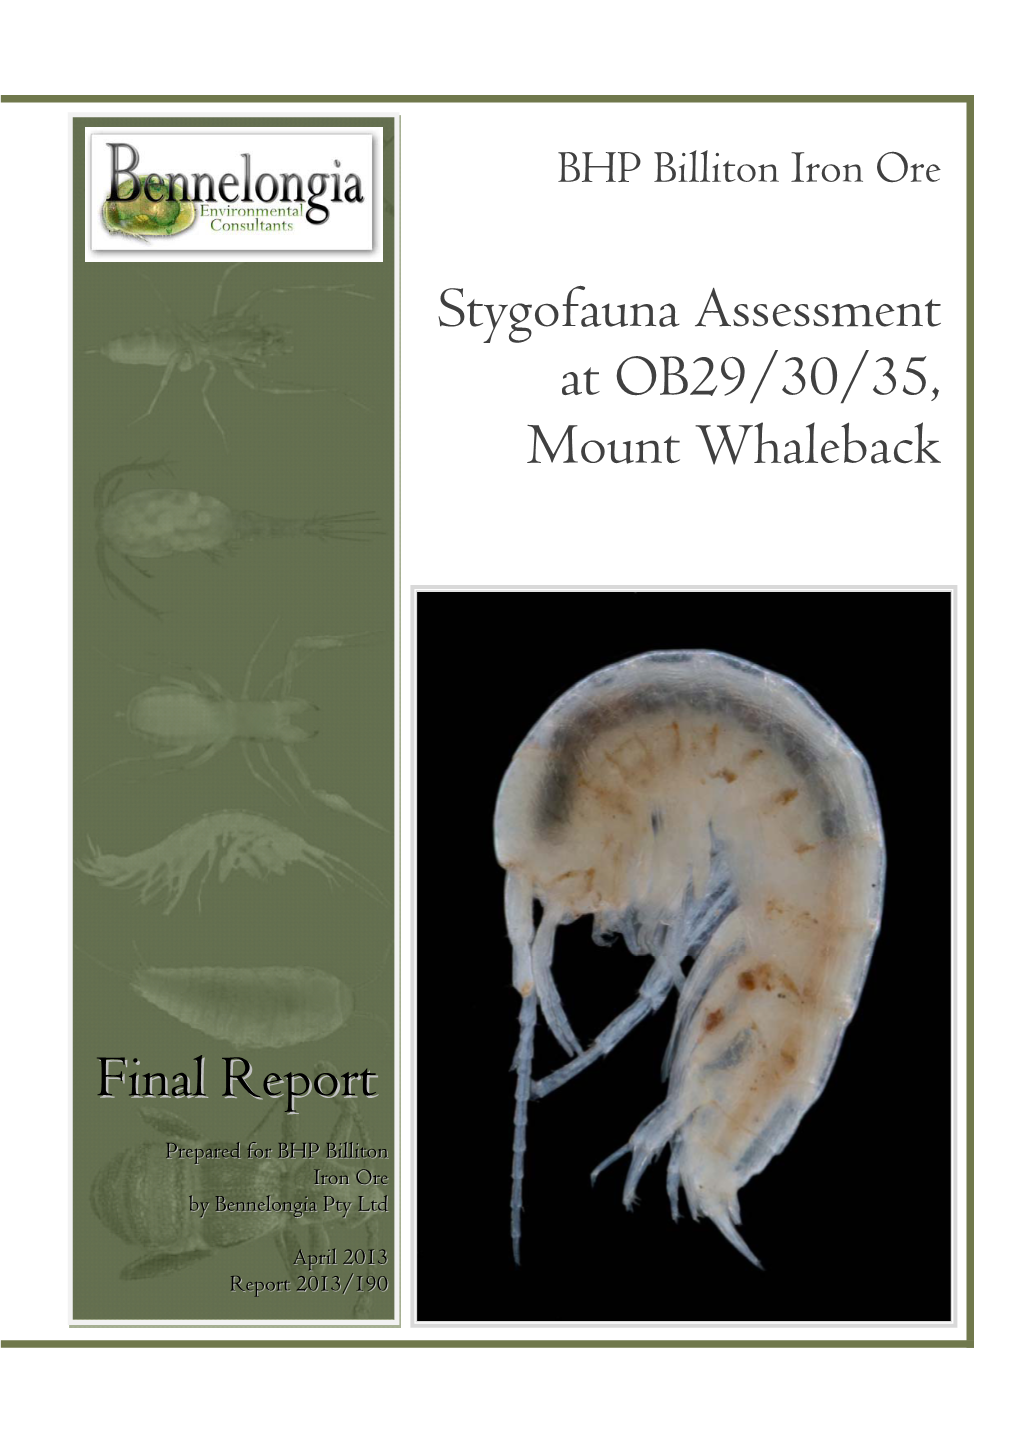 Final Report Stygofauna Assessment at OB29/30/35, Mount Whaleback